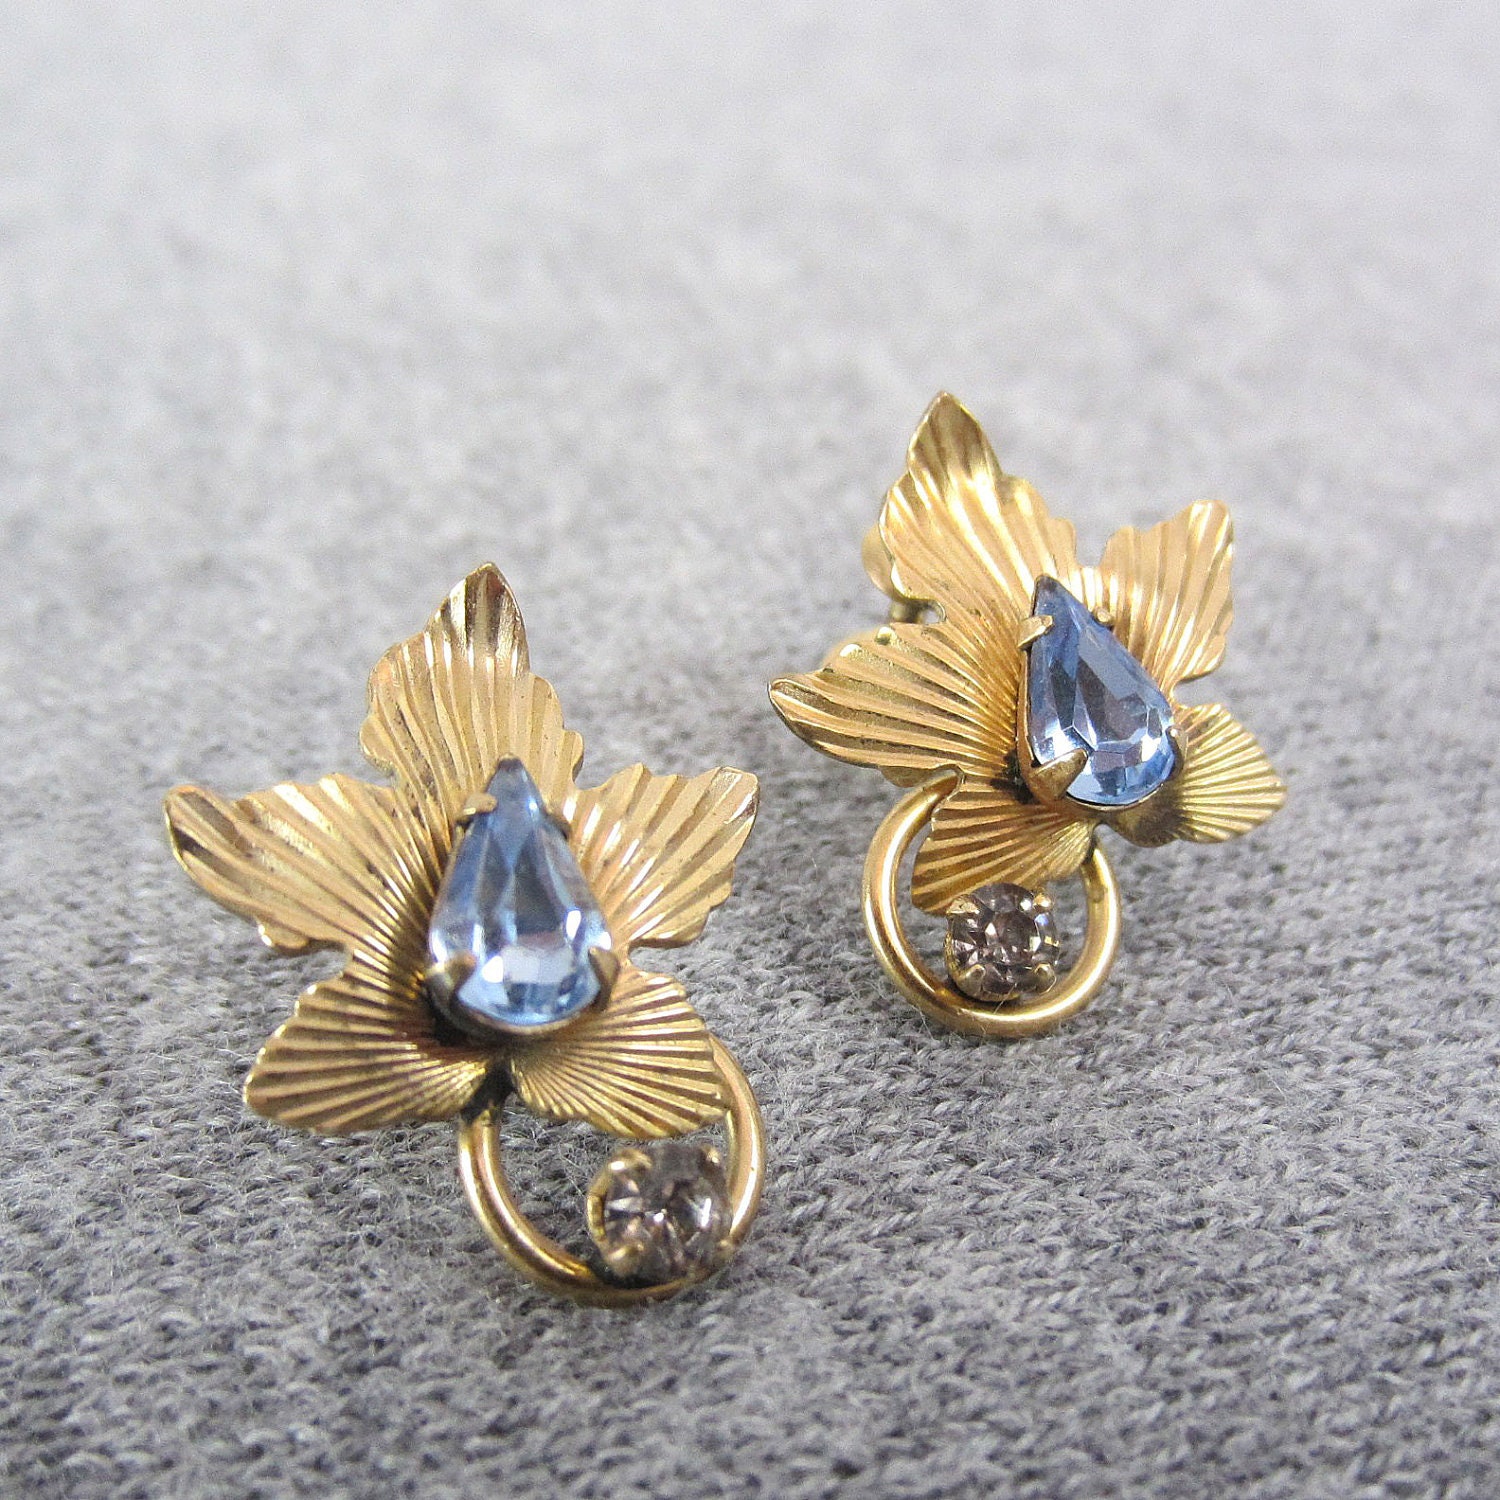 SALE / vintage earrings / gold leaf / blue rhinestone / 12k gold filled / 1950s / Botanically Blue earrings